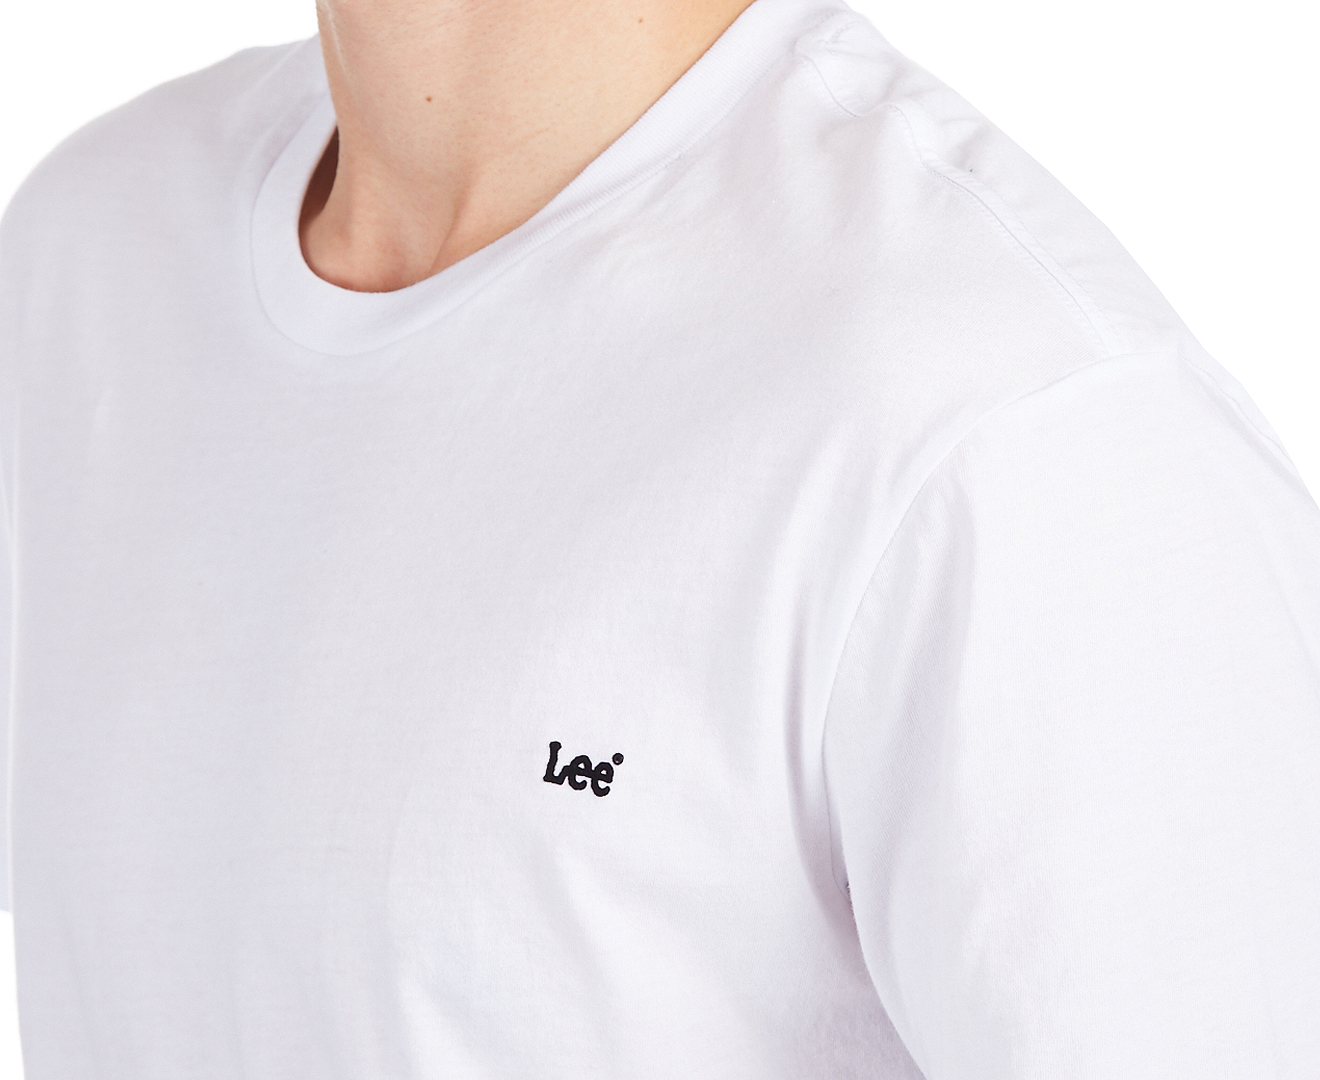 Lee Men's No Brainer Tee / T-Shirt / Tshirt - White Light | Catch.co.nz